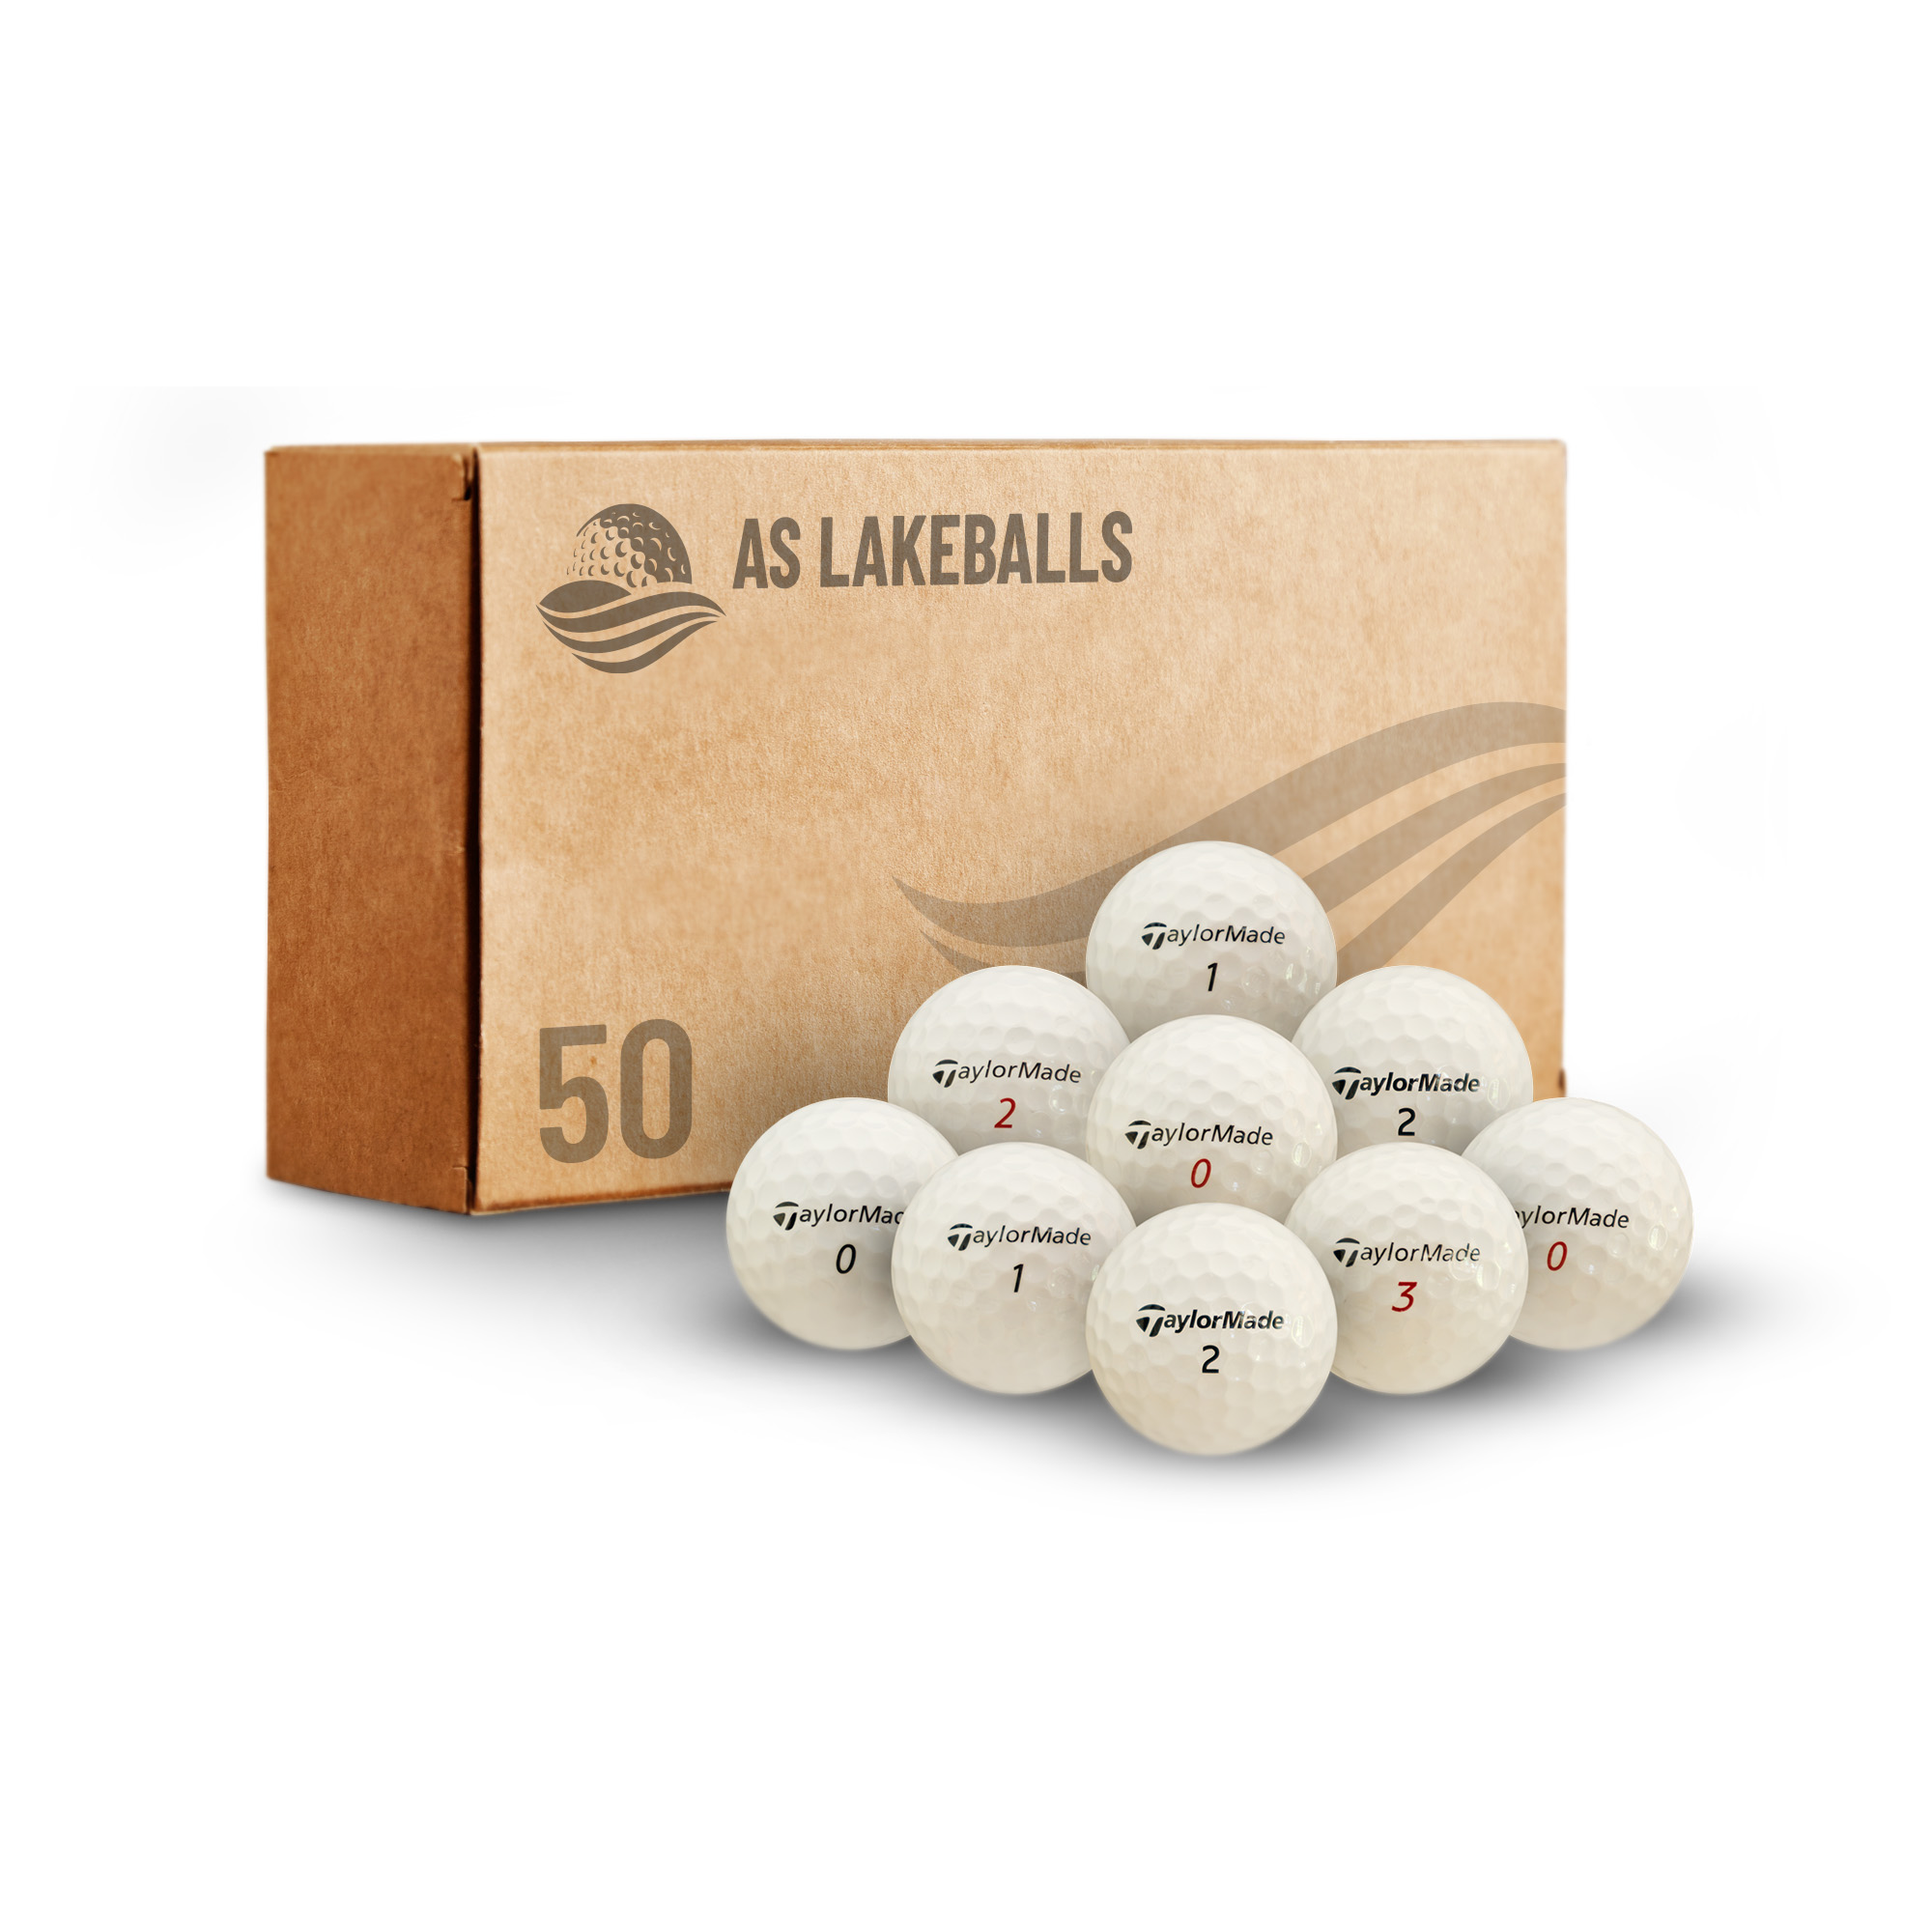 50 Stück Taylor Made Mix AAAA Lakeballs bei AS Lakeballs günstig kaufen